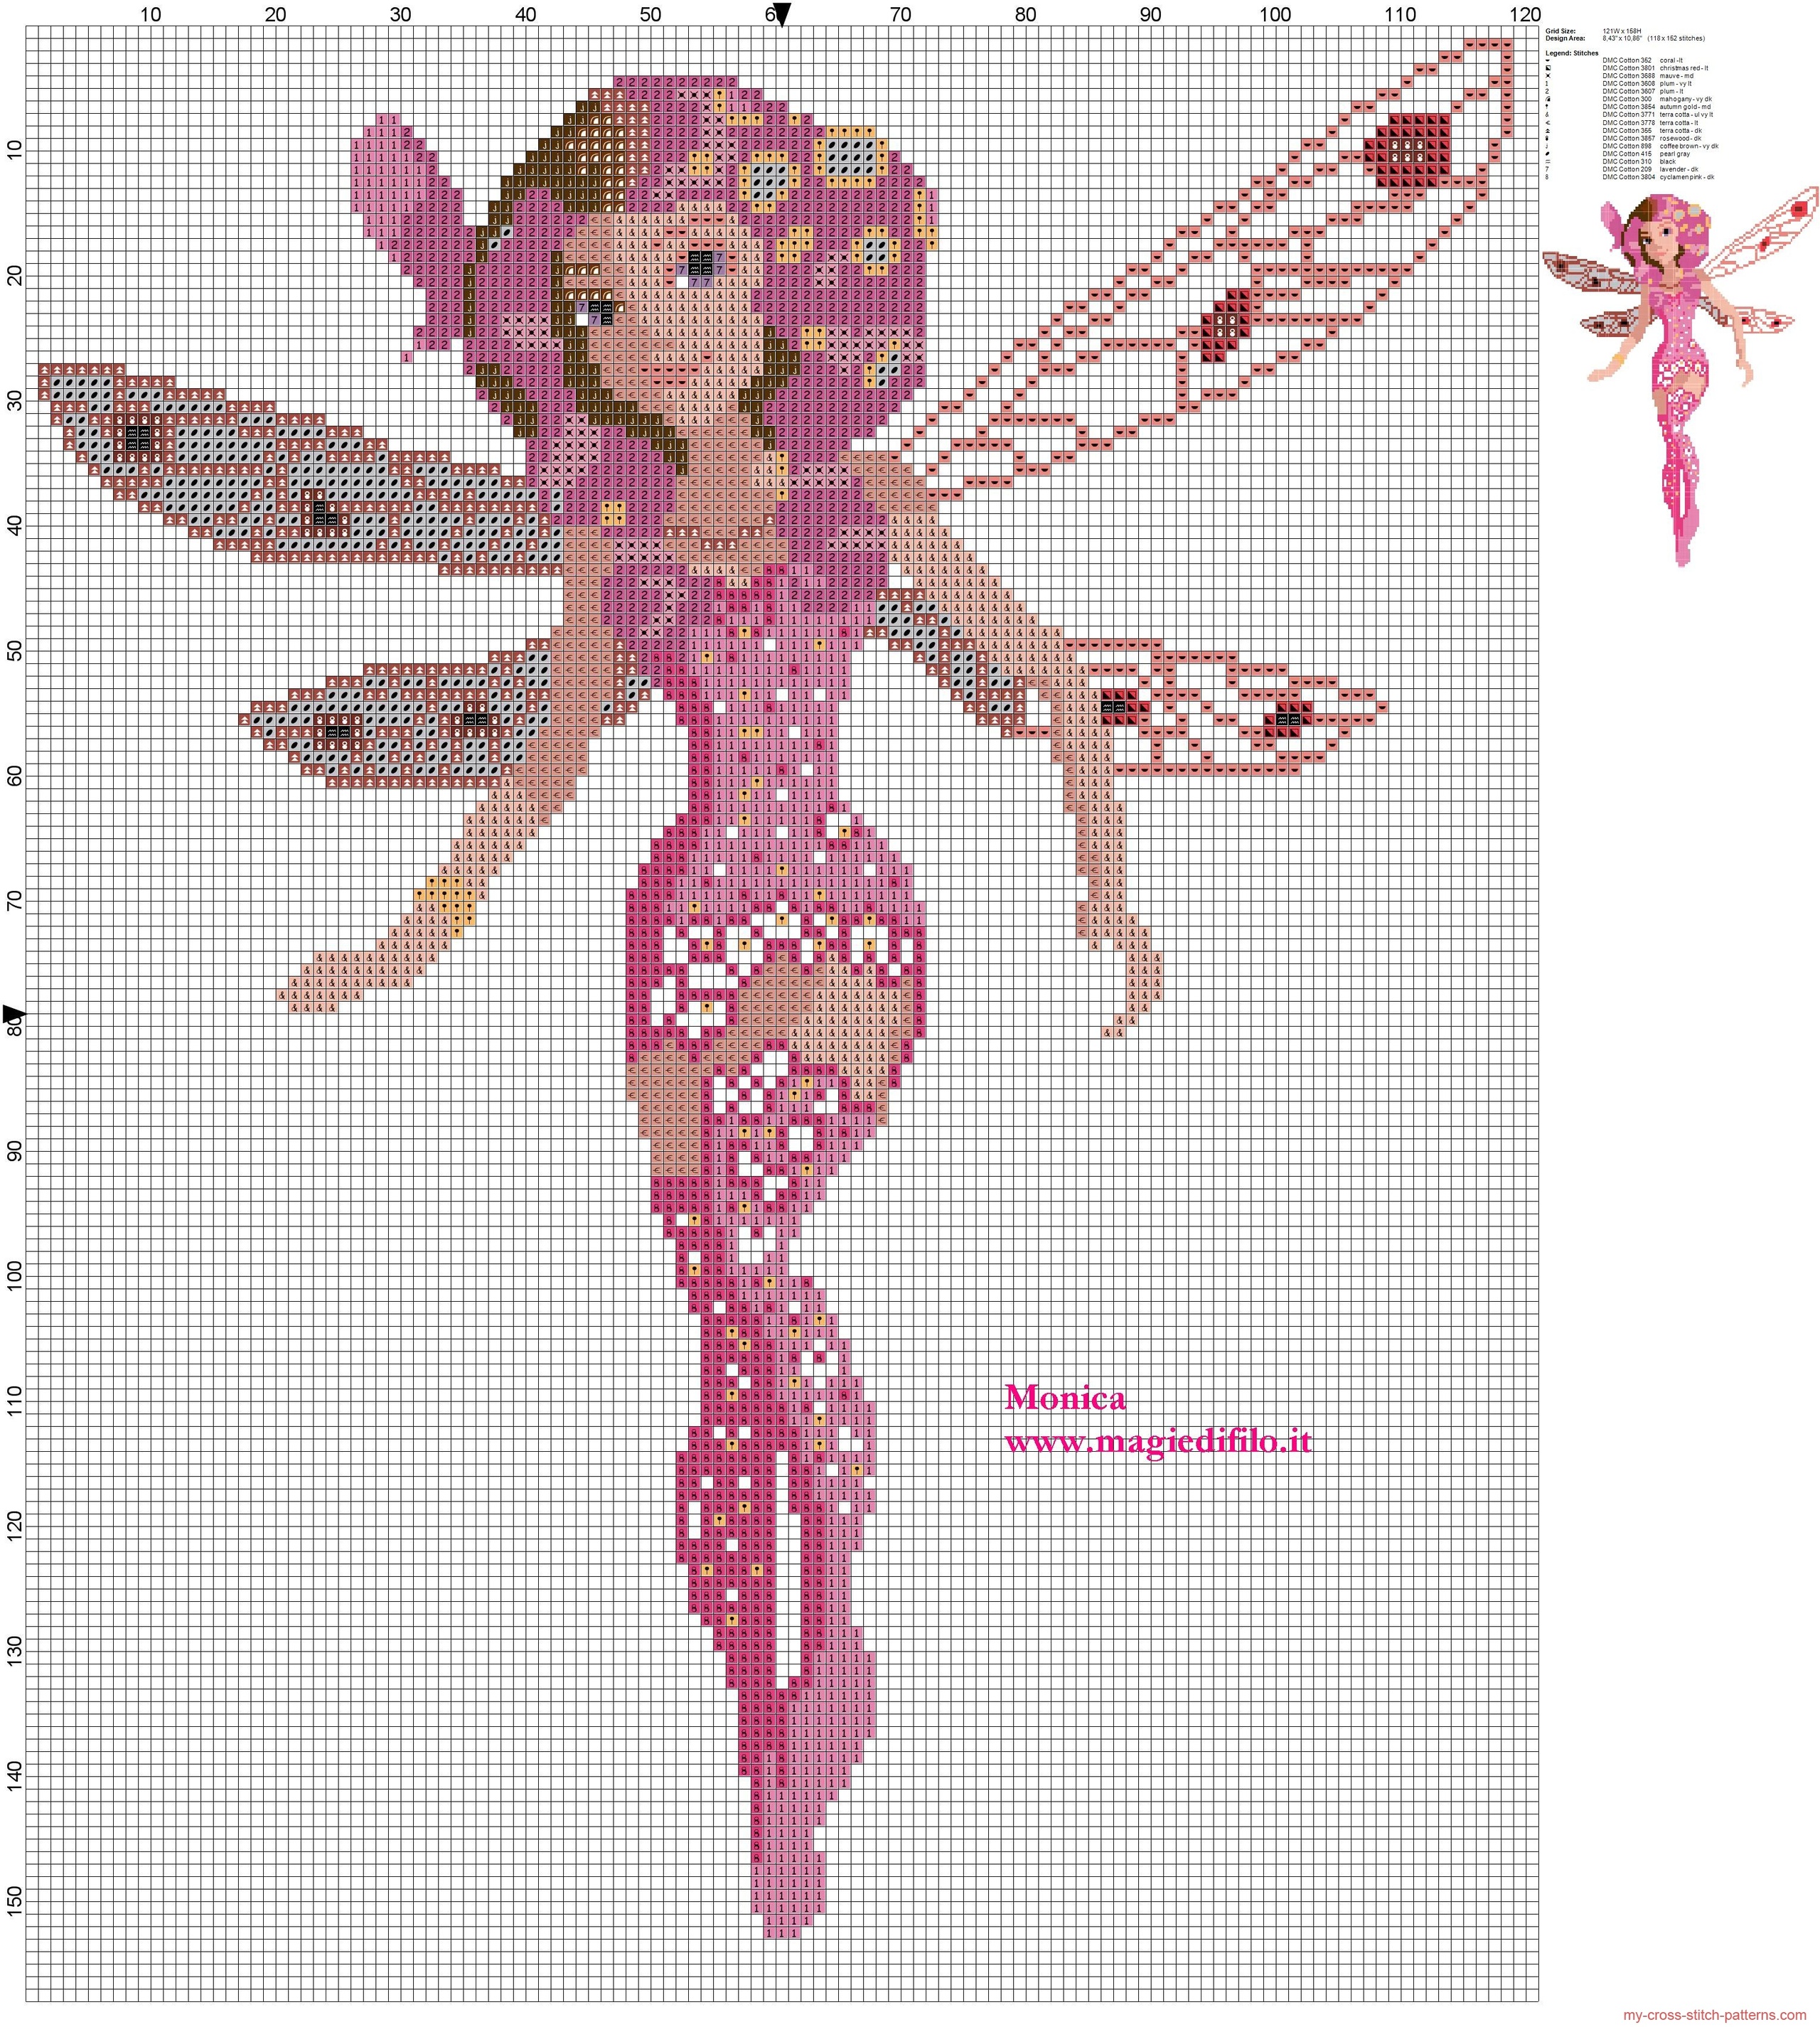 mia_the_fairy_mia_and_me_cross_stitch_pattern